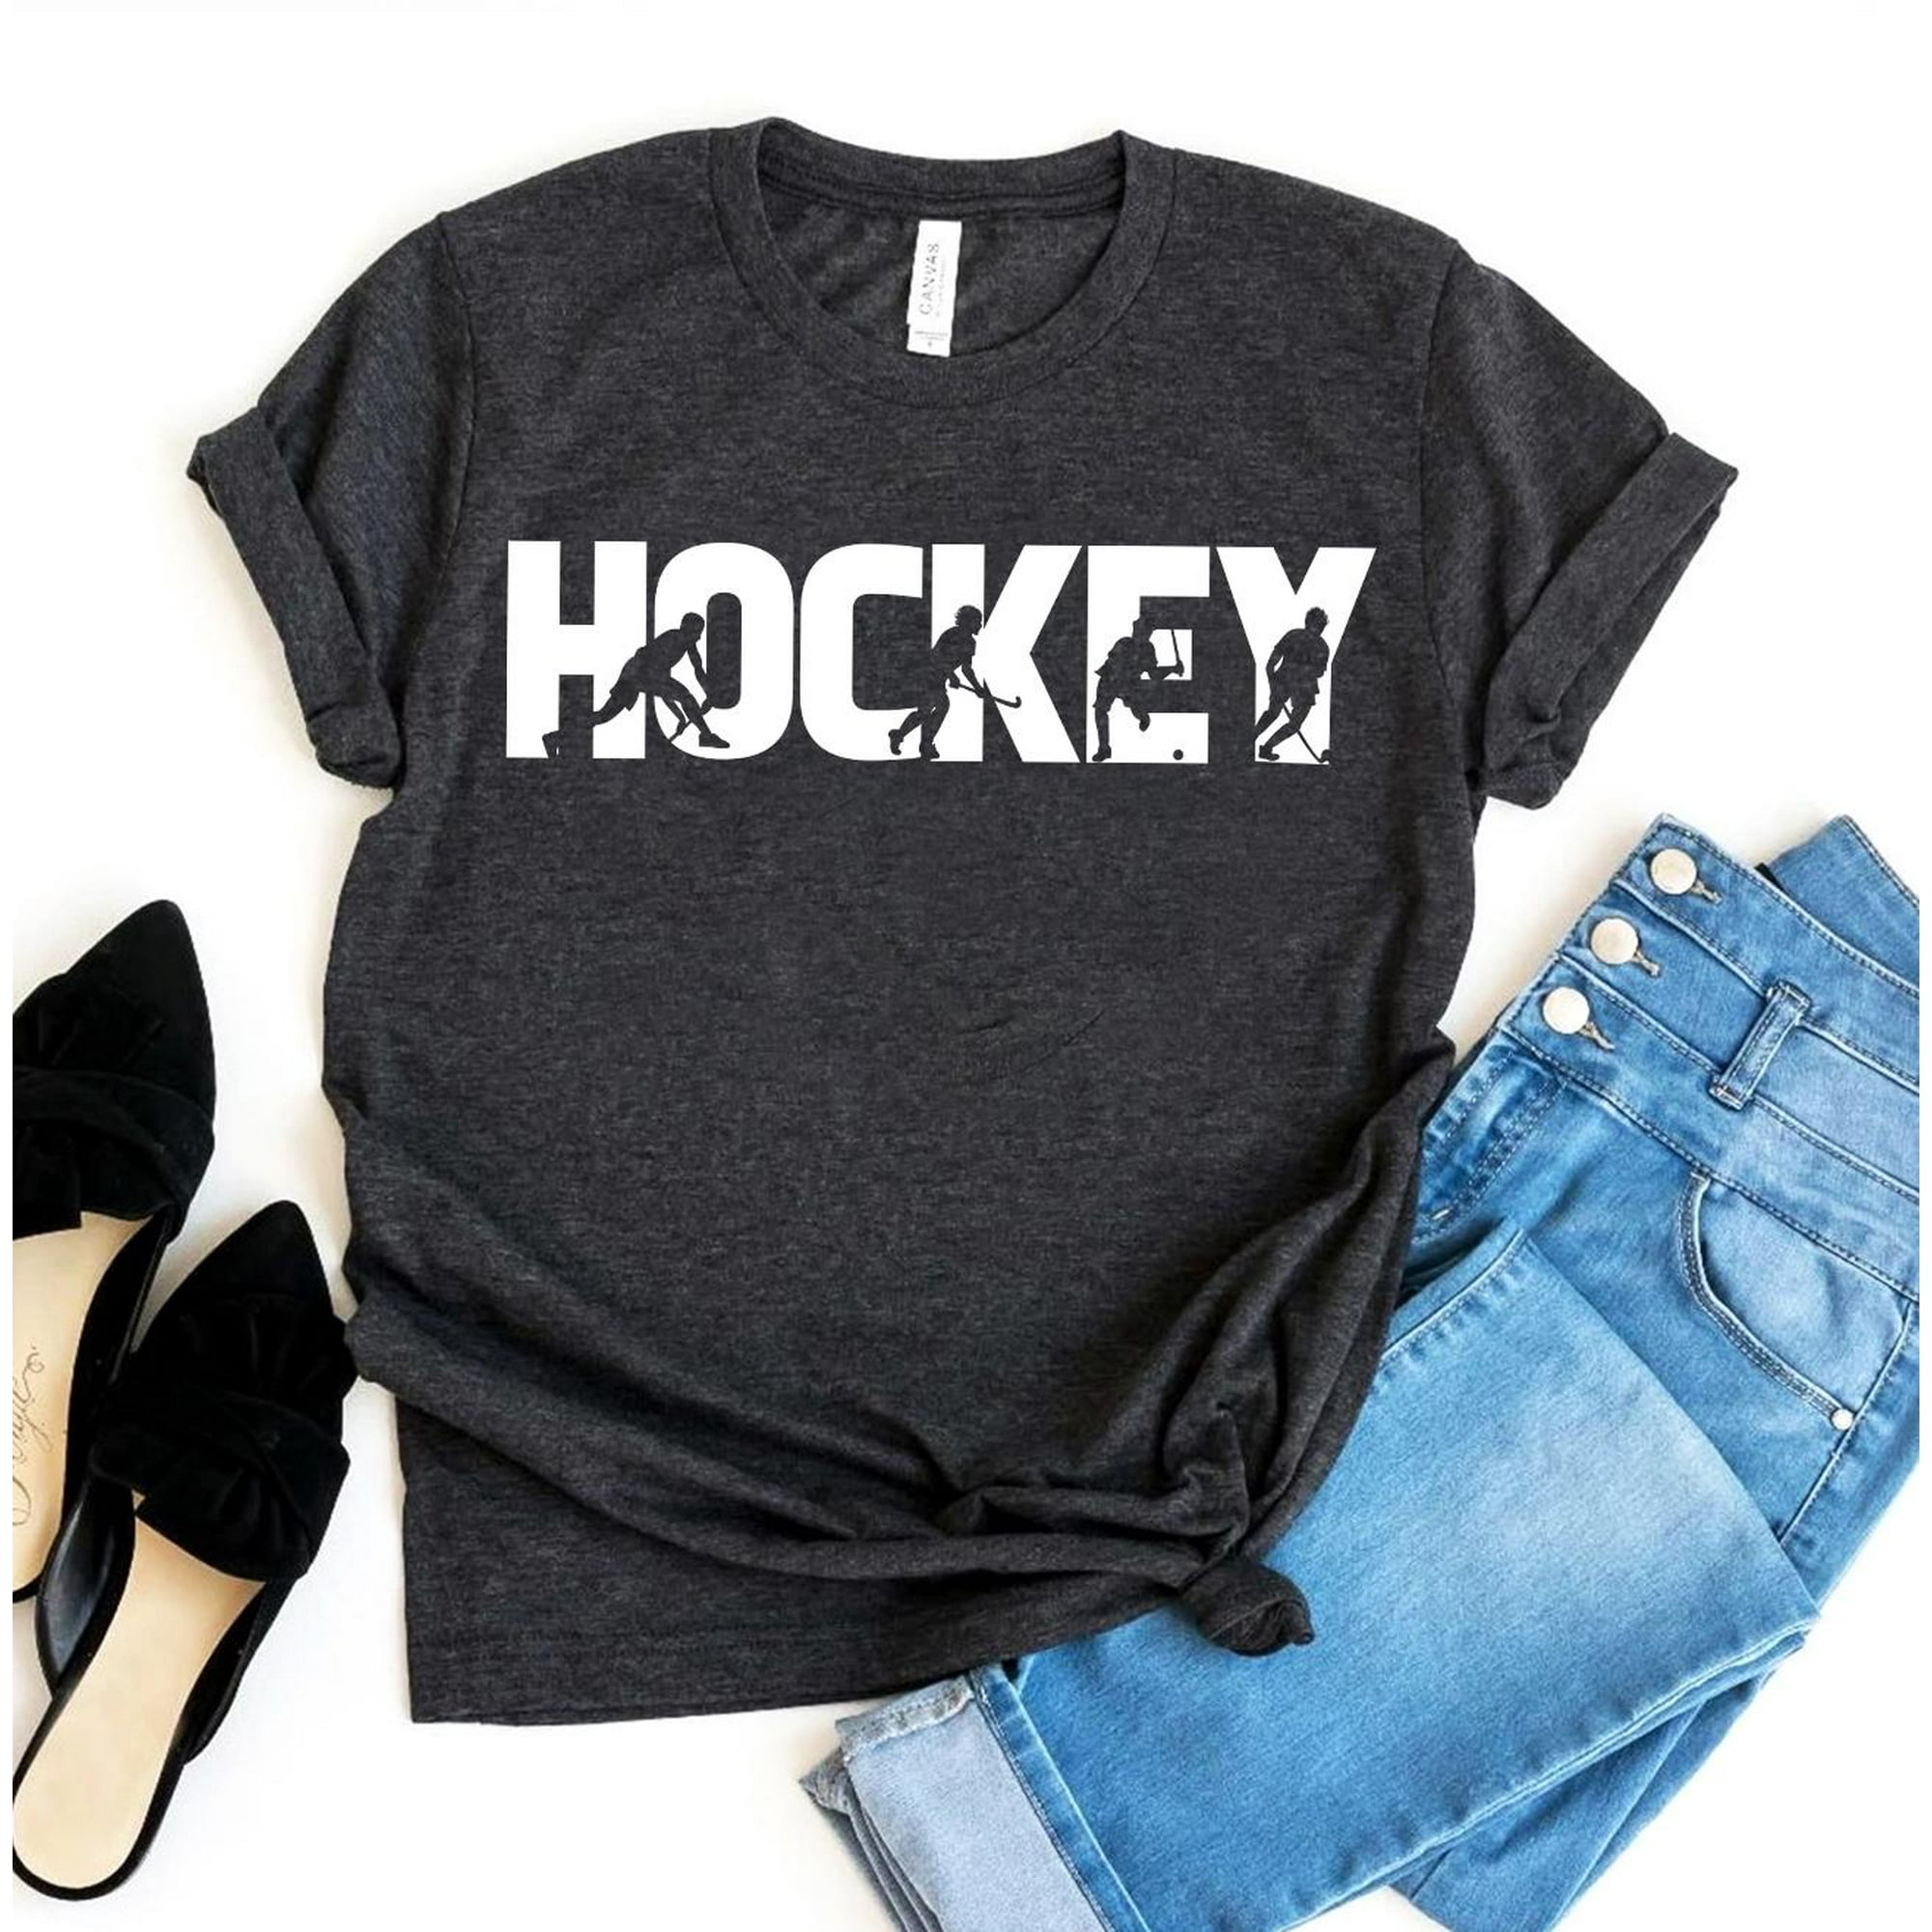 Super Cool Hockey Mom' Women's T-Shirt